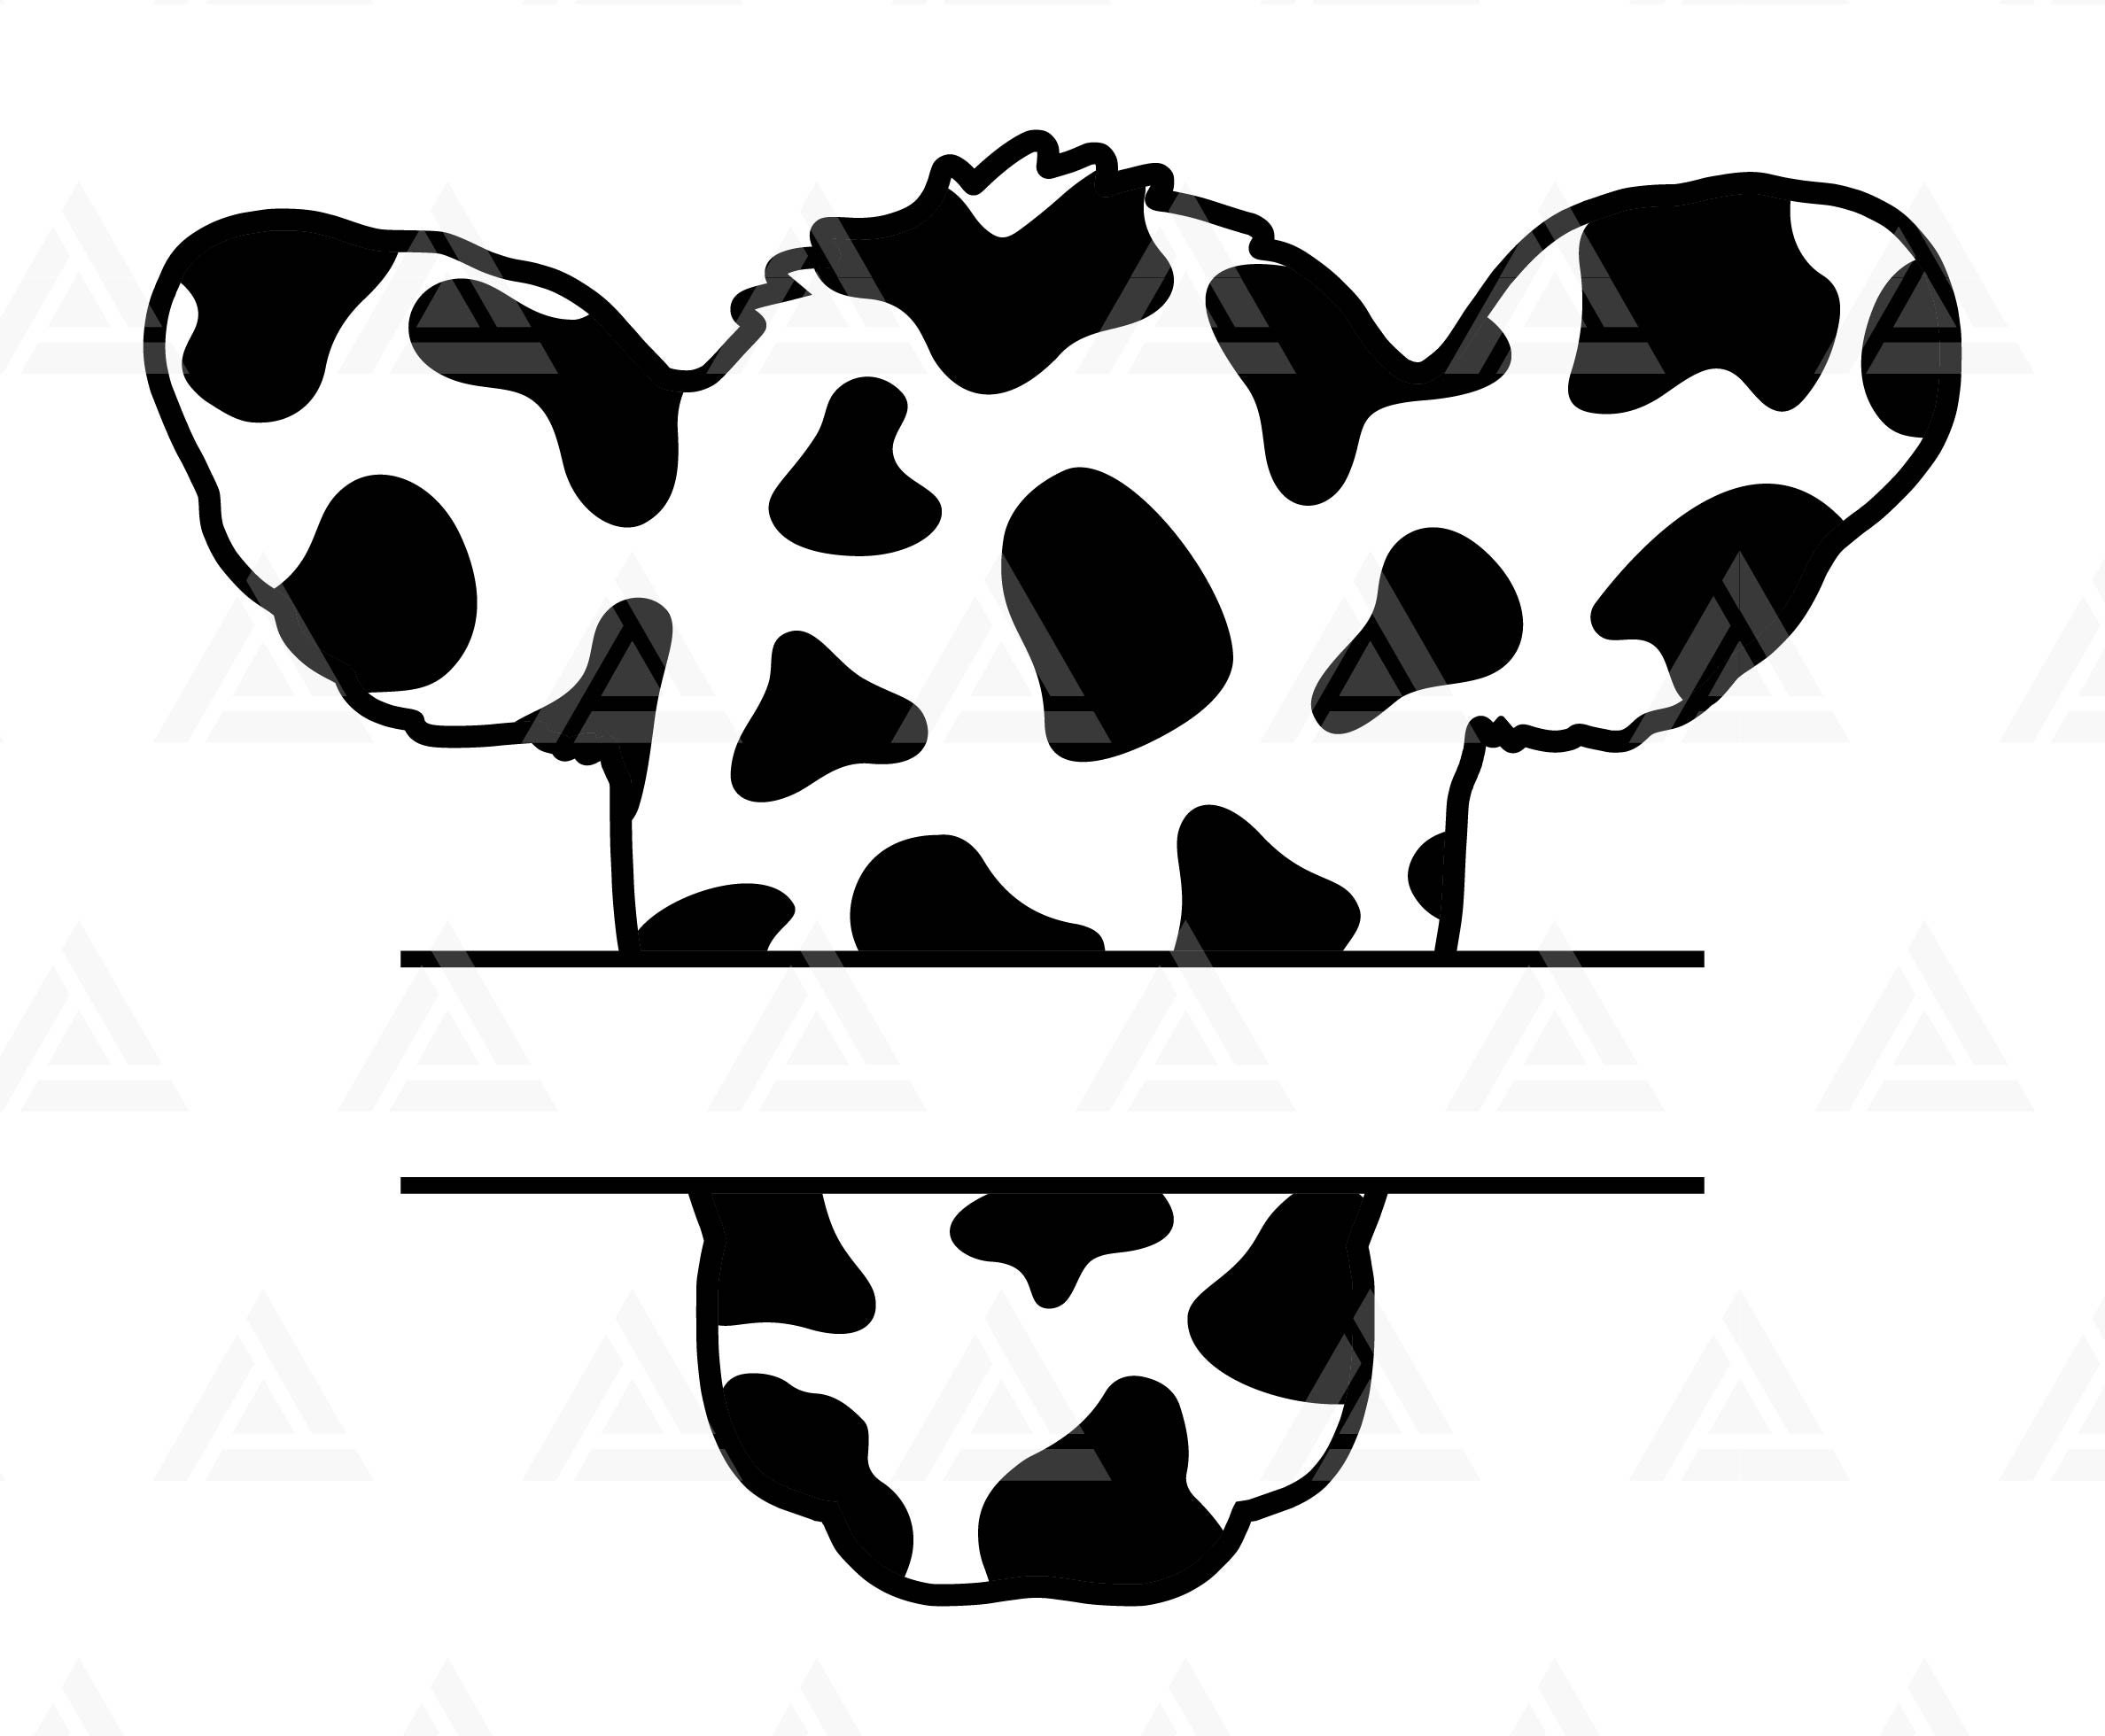 Black and white cow animal print vinyl carpet - TenStickers